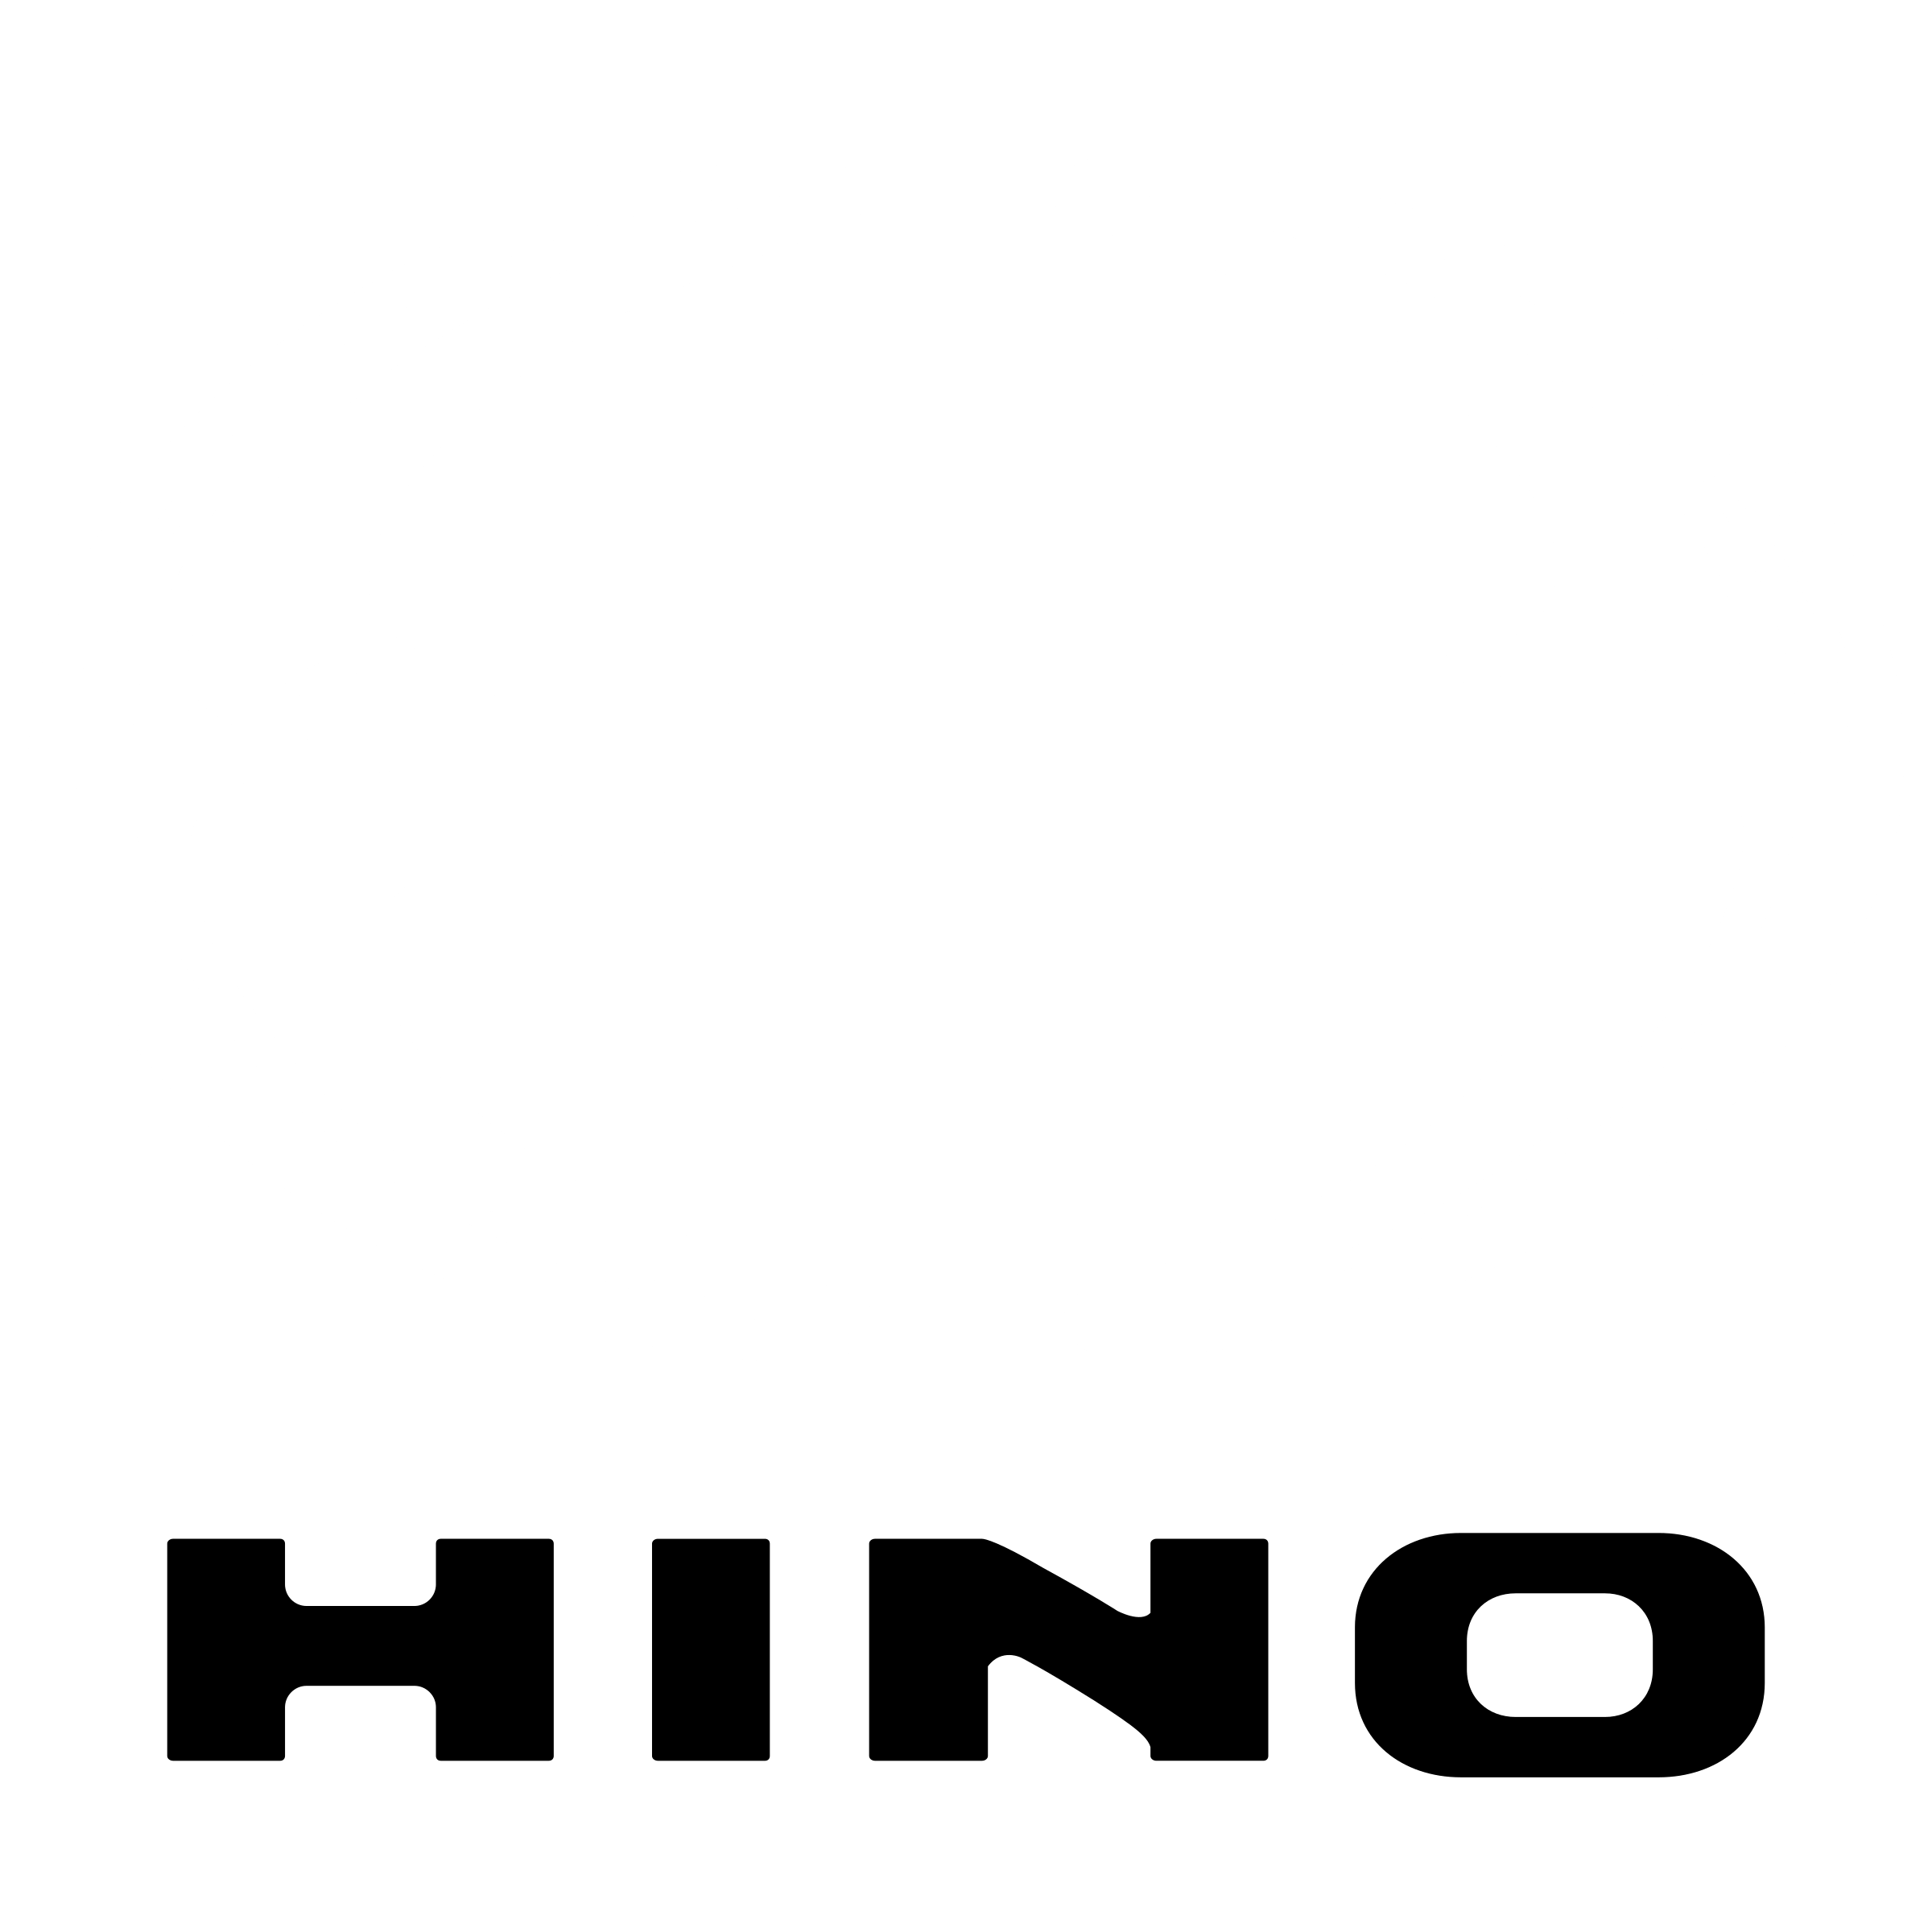 Hino Logo - Hino Diesel Trucks Logo PNG Transparent & SVG Vector - Freebie Supply